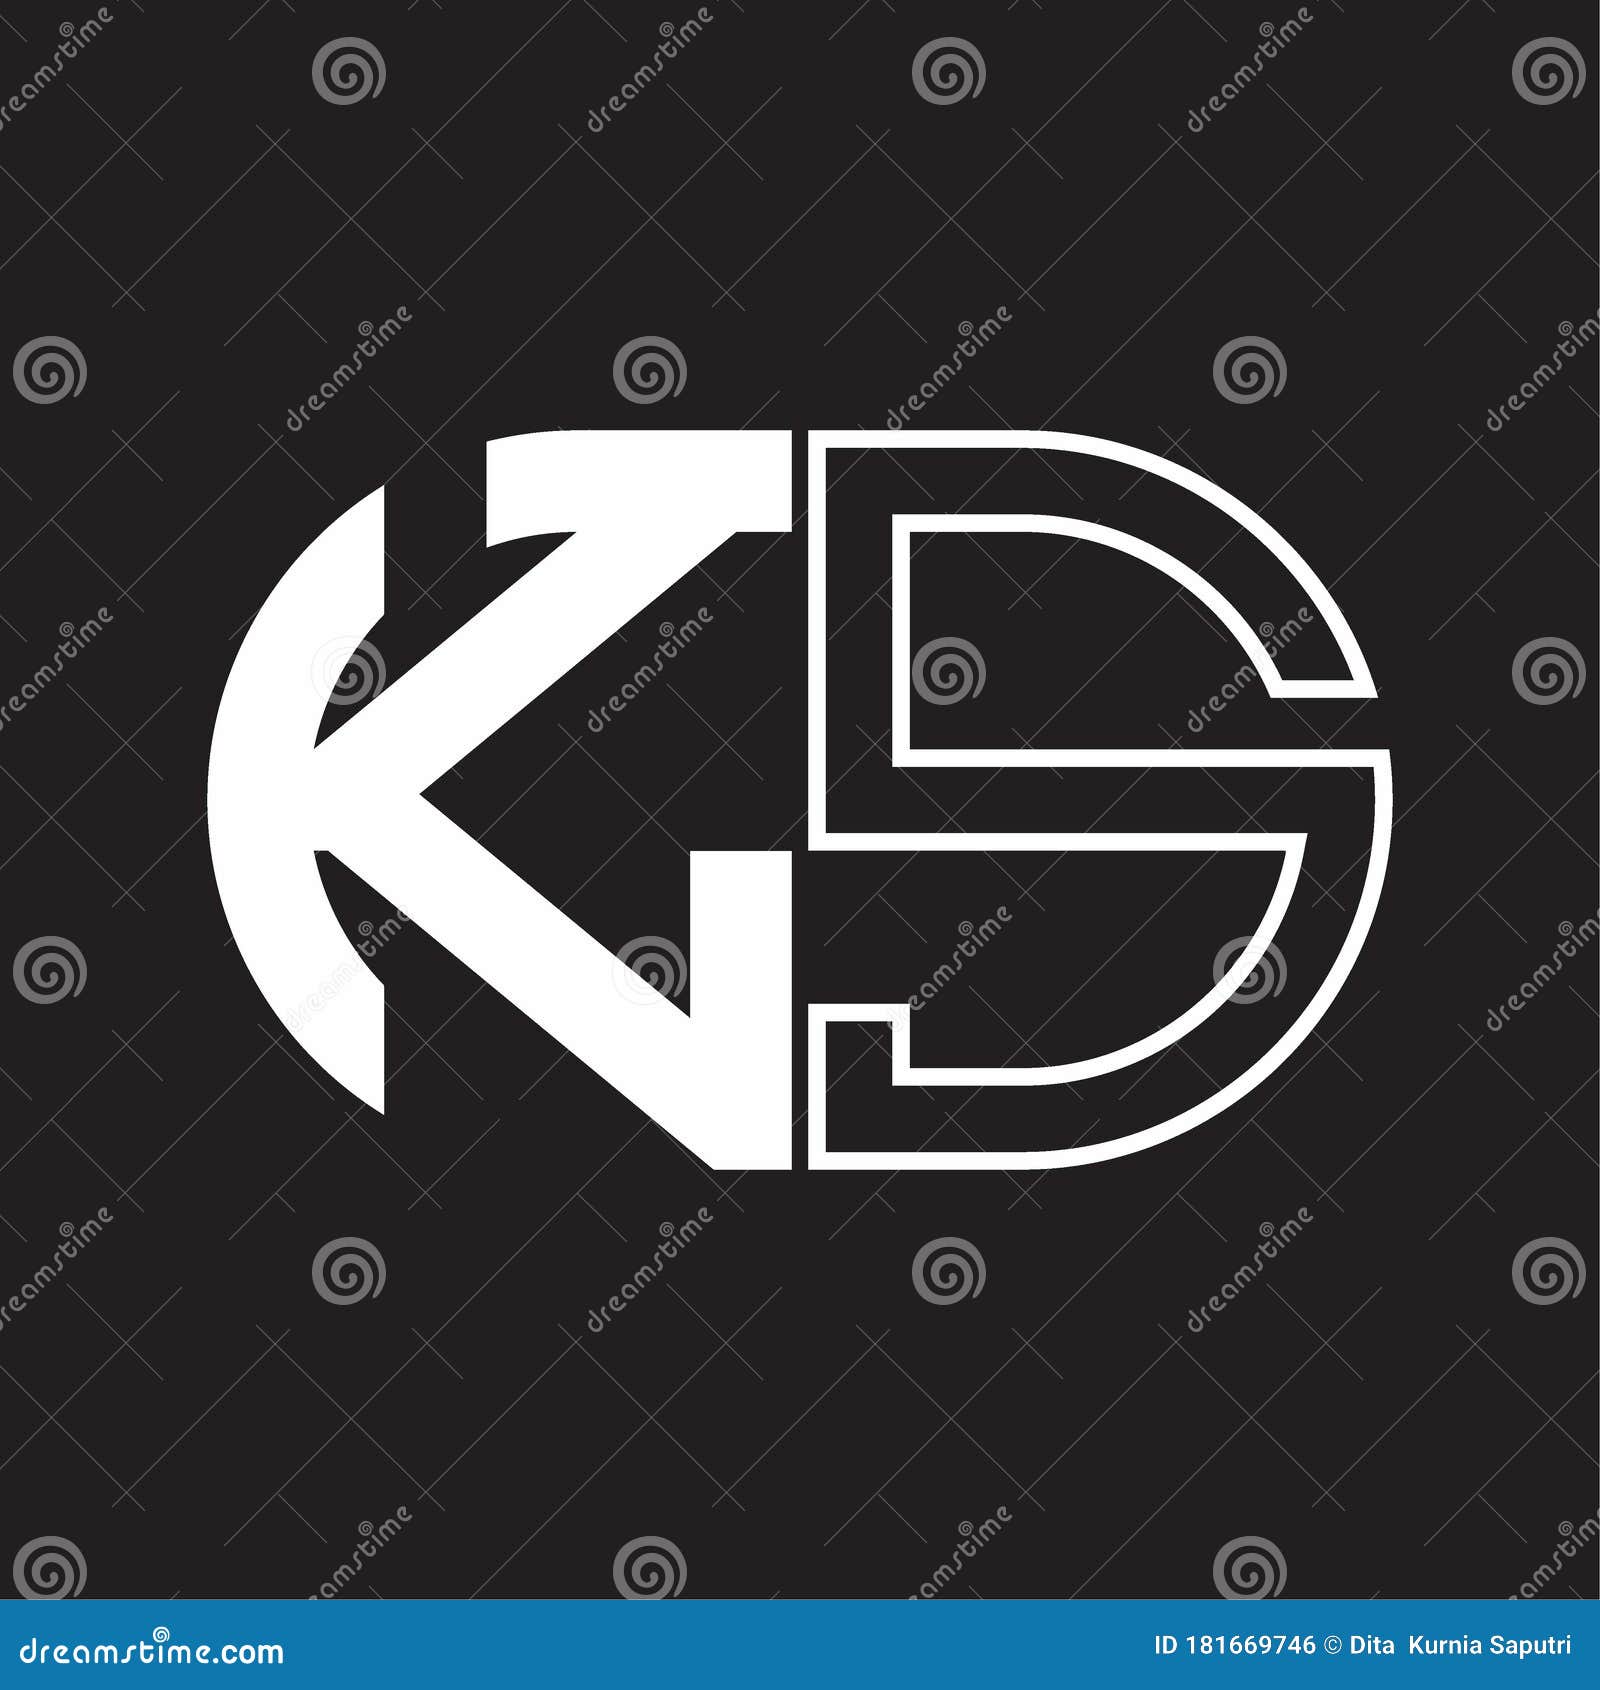 KS Letter Logo Monogram with Oval Shape Negative Space Design Template ...